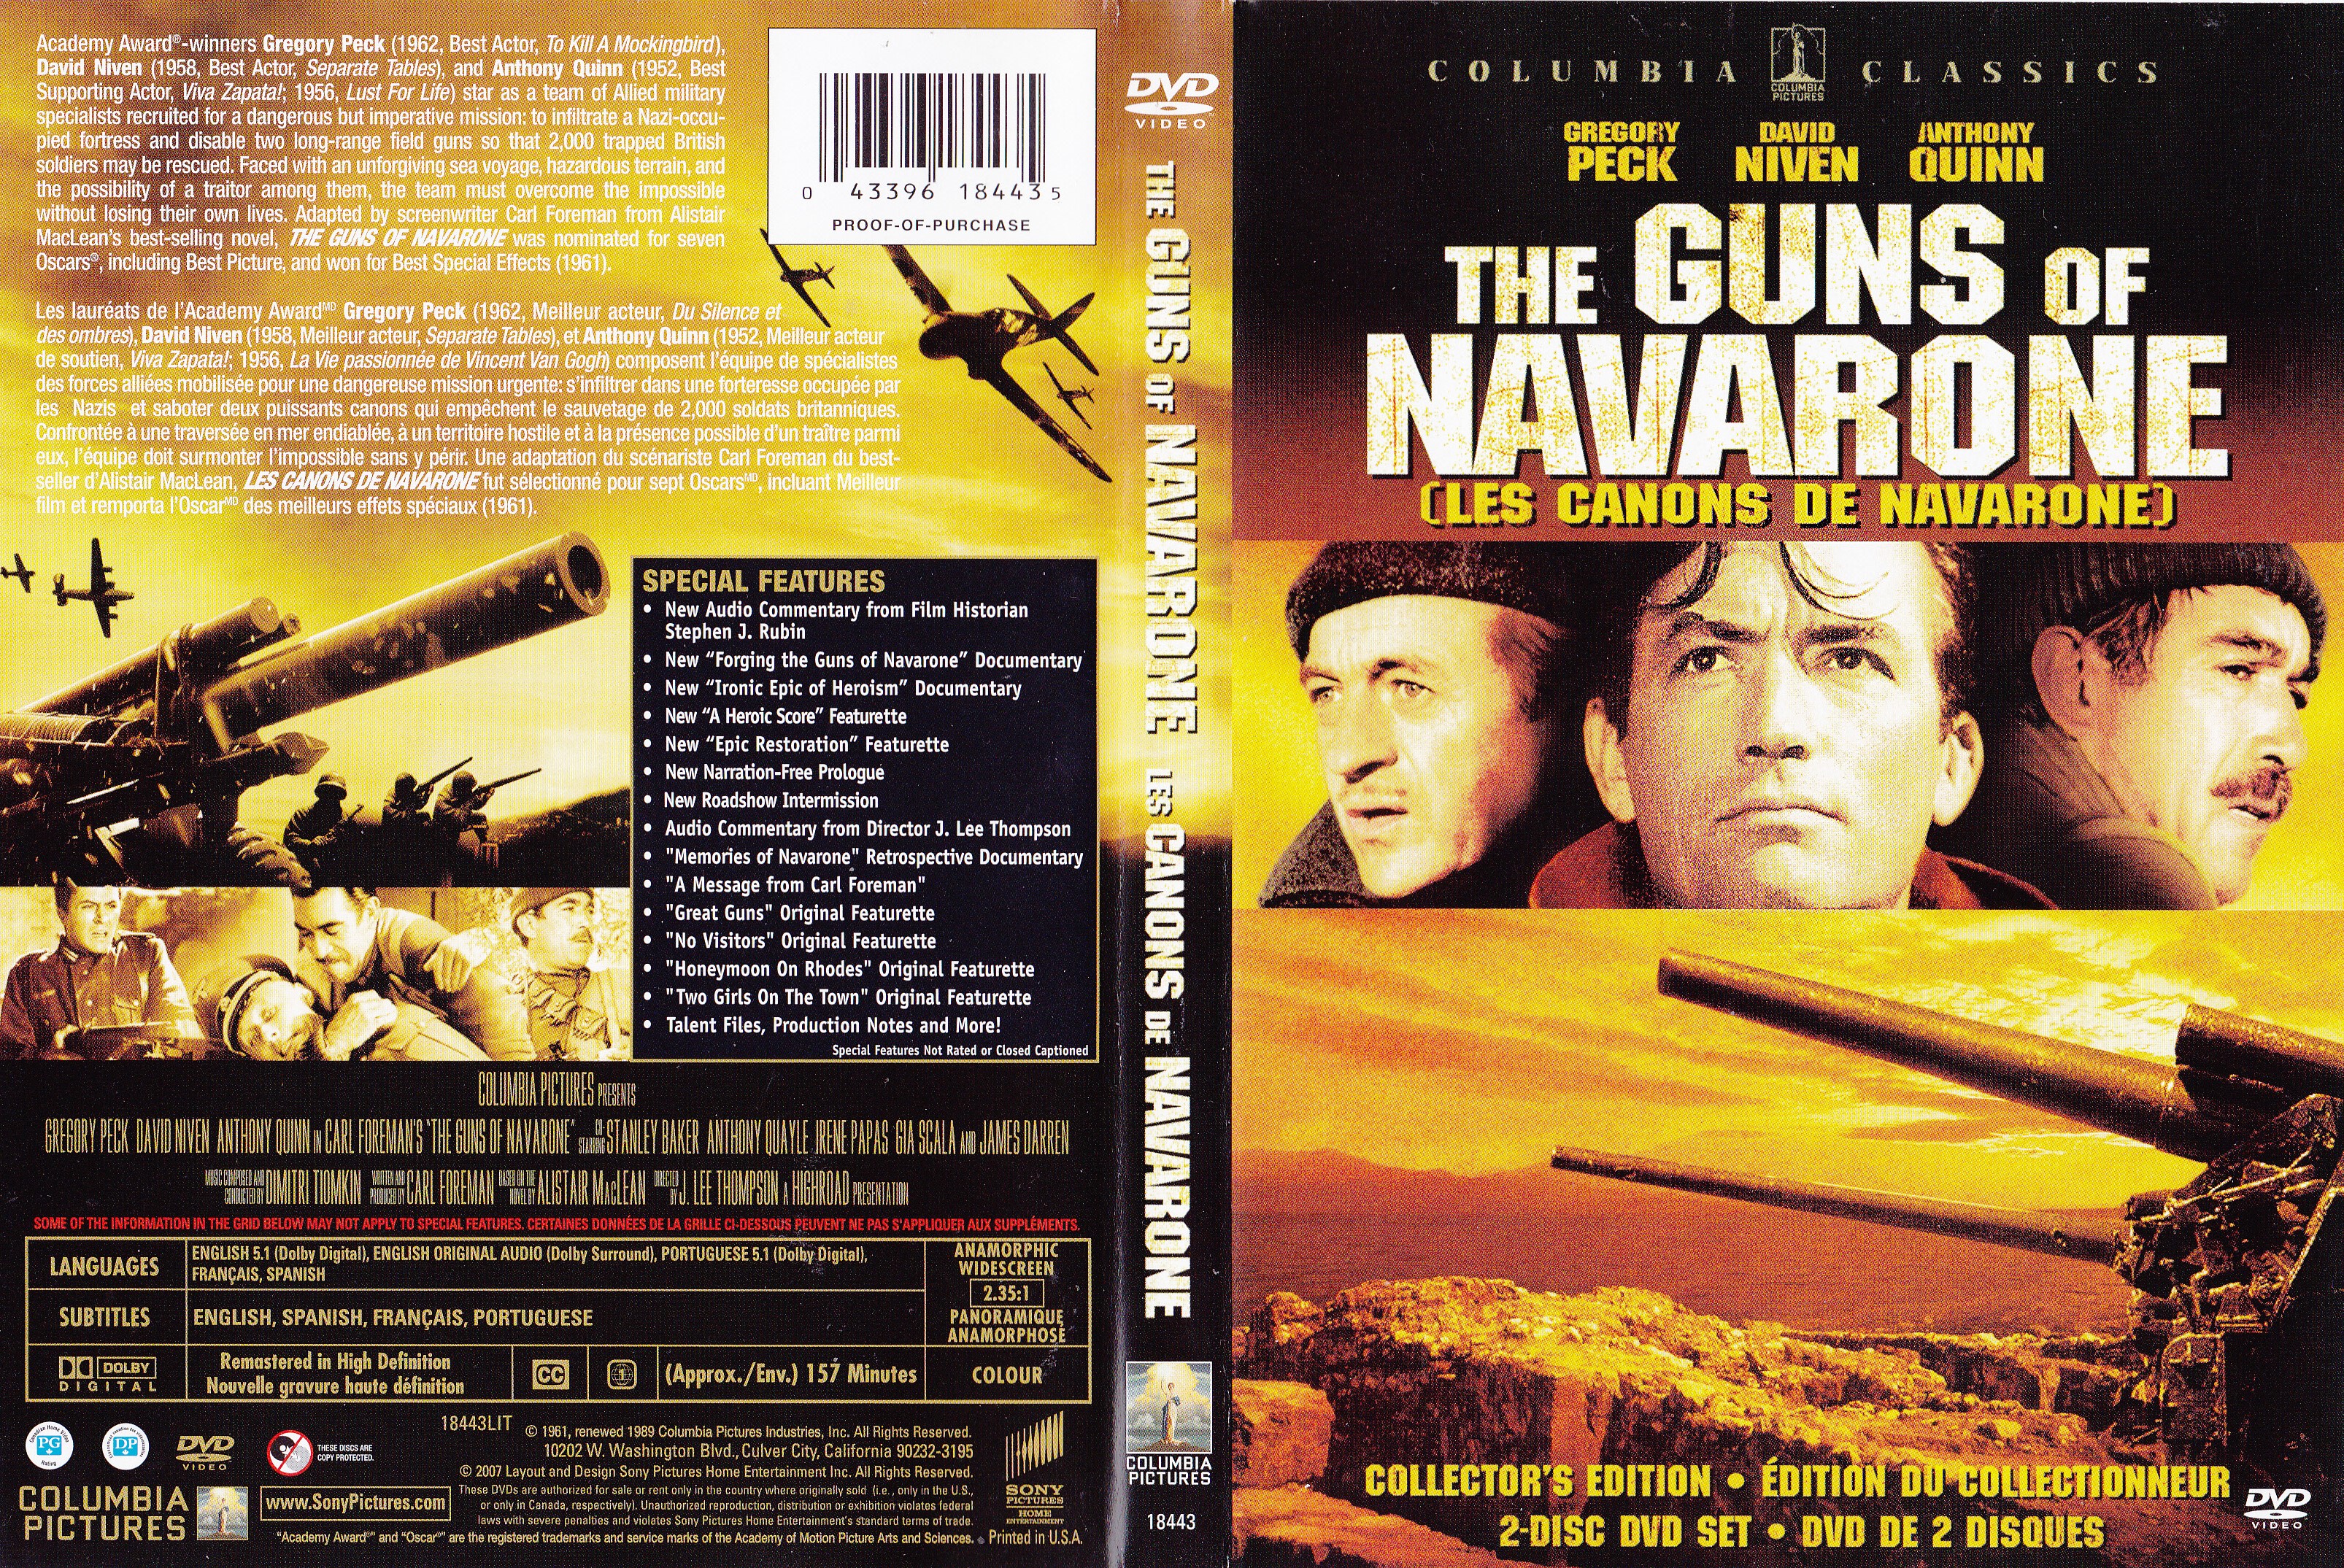 Jaquette DVD The guns of Navarone - Les canons de Navarone (Canadienne)